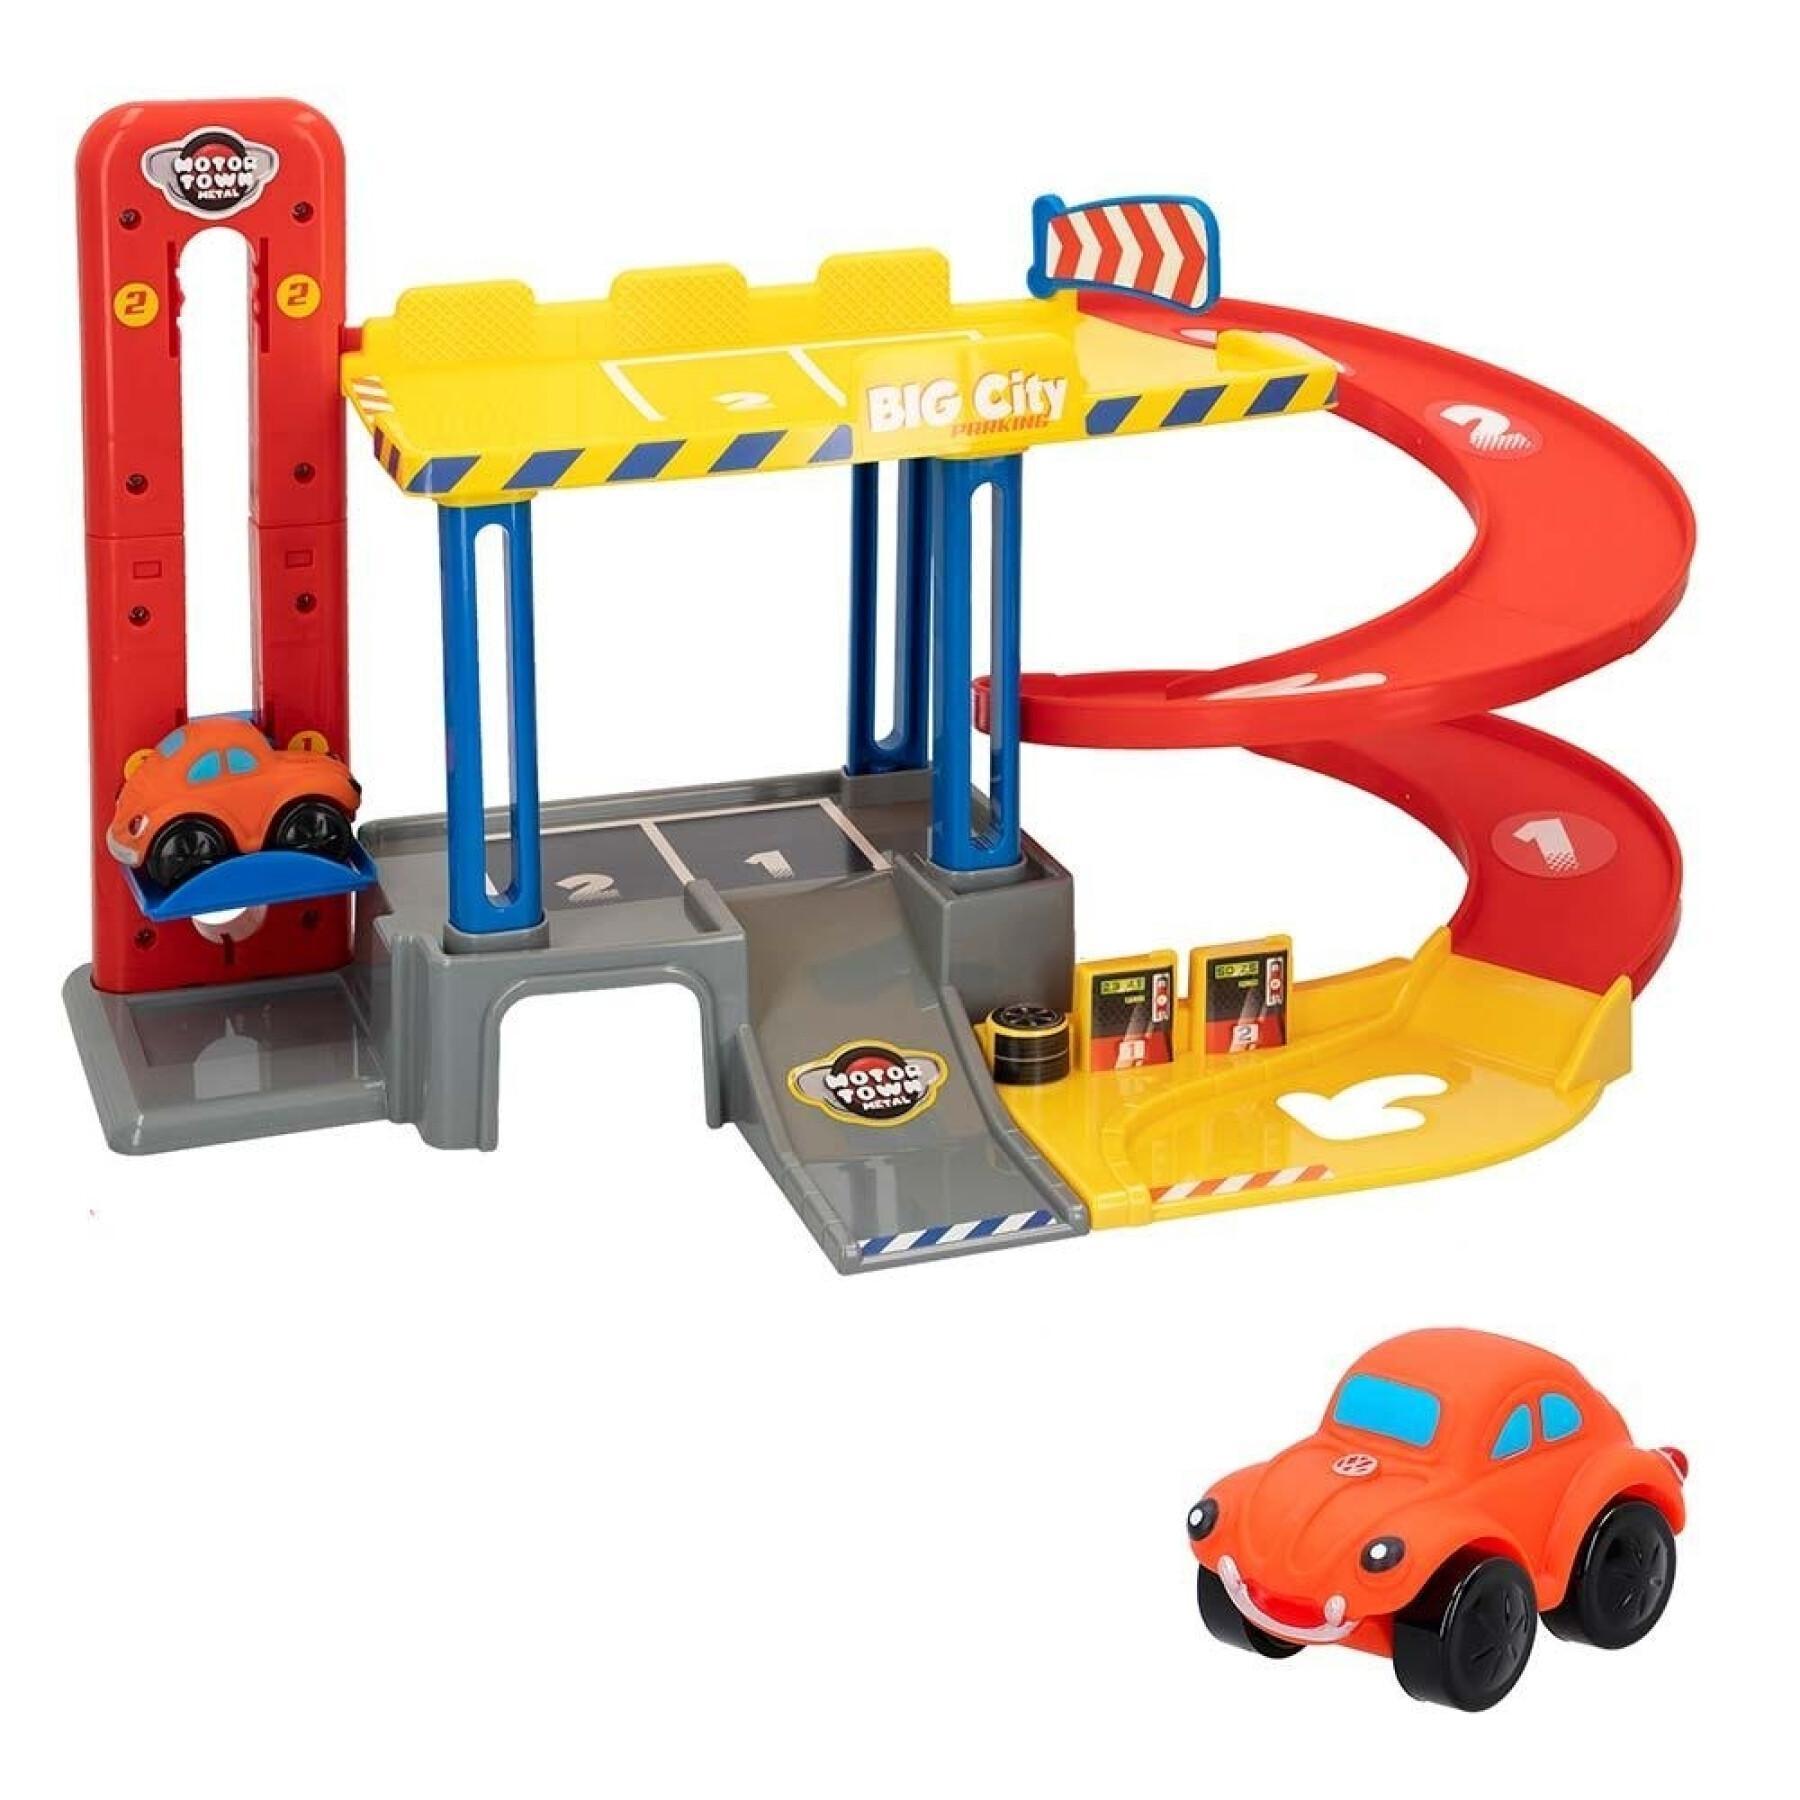 Garage véhicule Motor Town Bat-y Toys